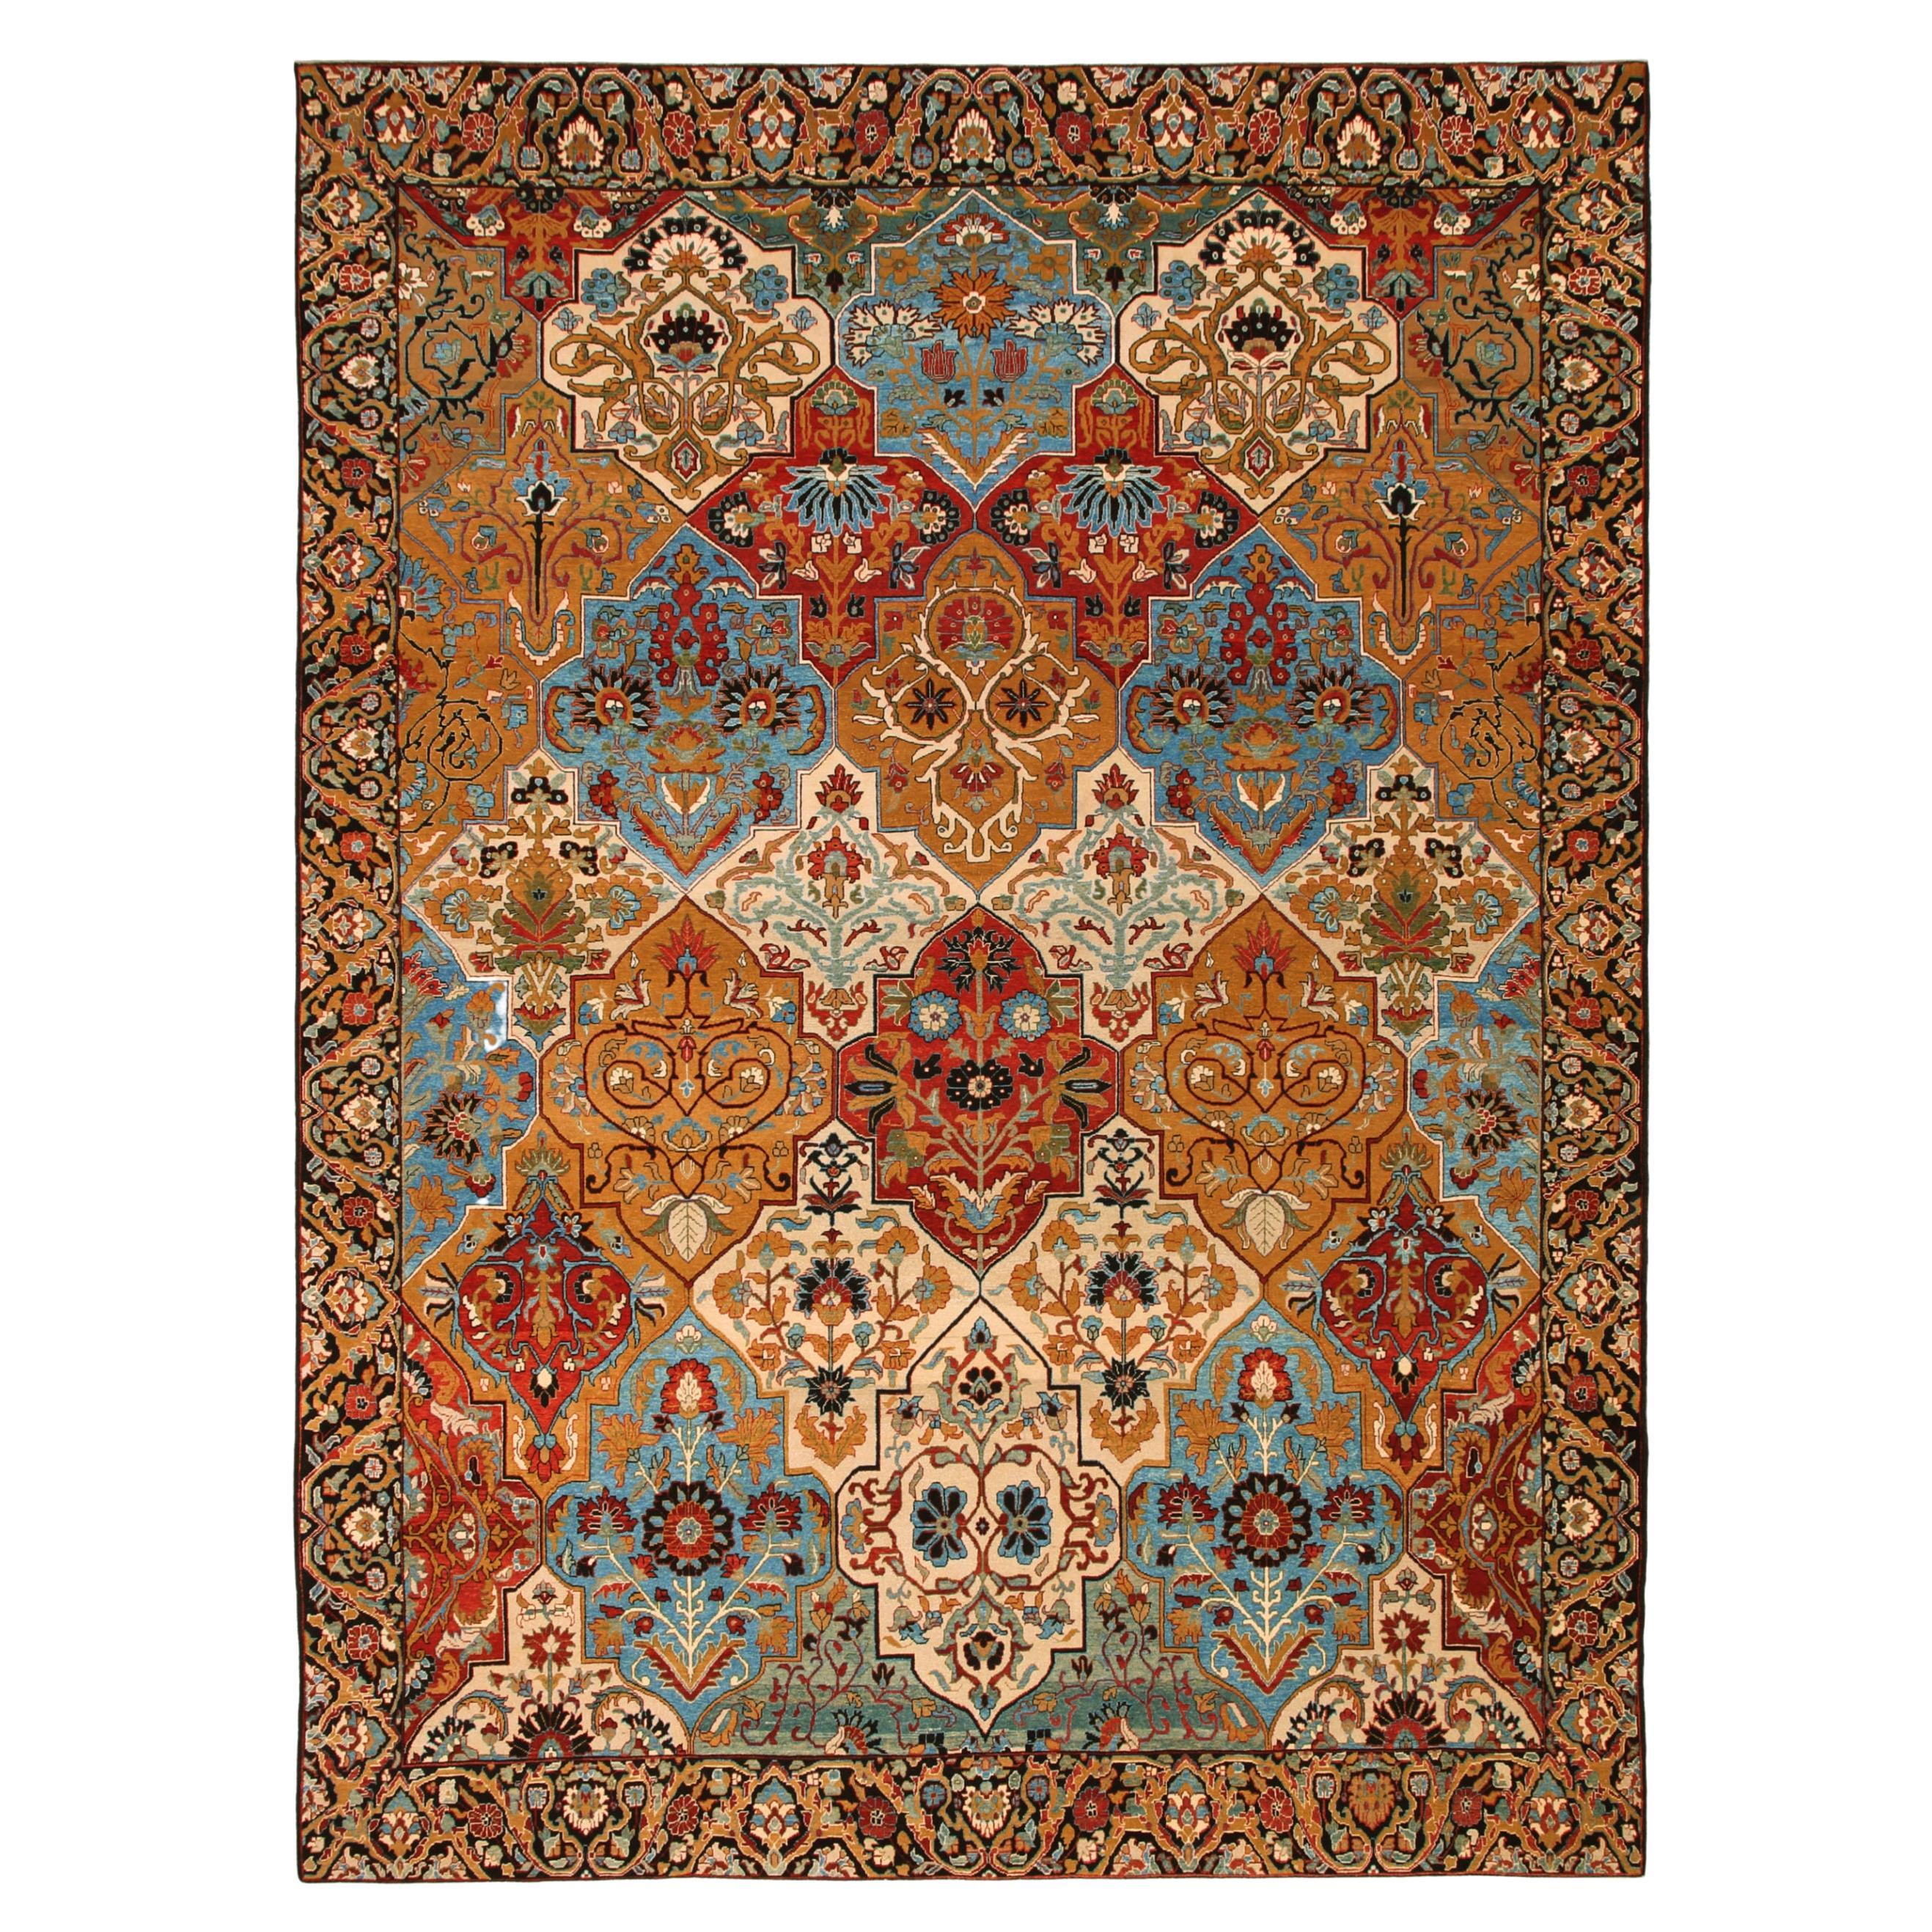 Ararat Rugs Kerman Multi-Medallion Carpet 17th Century Revival Rug, Natural Dyed